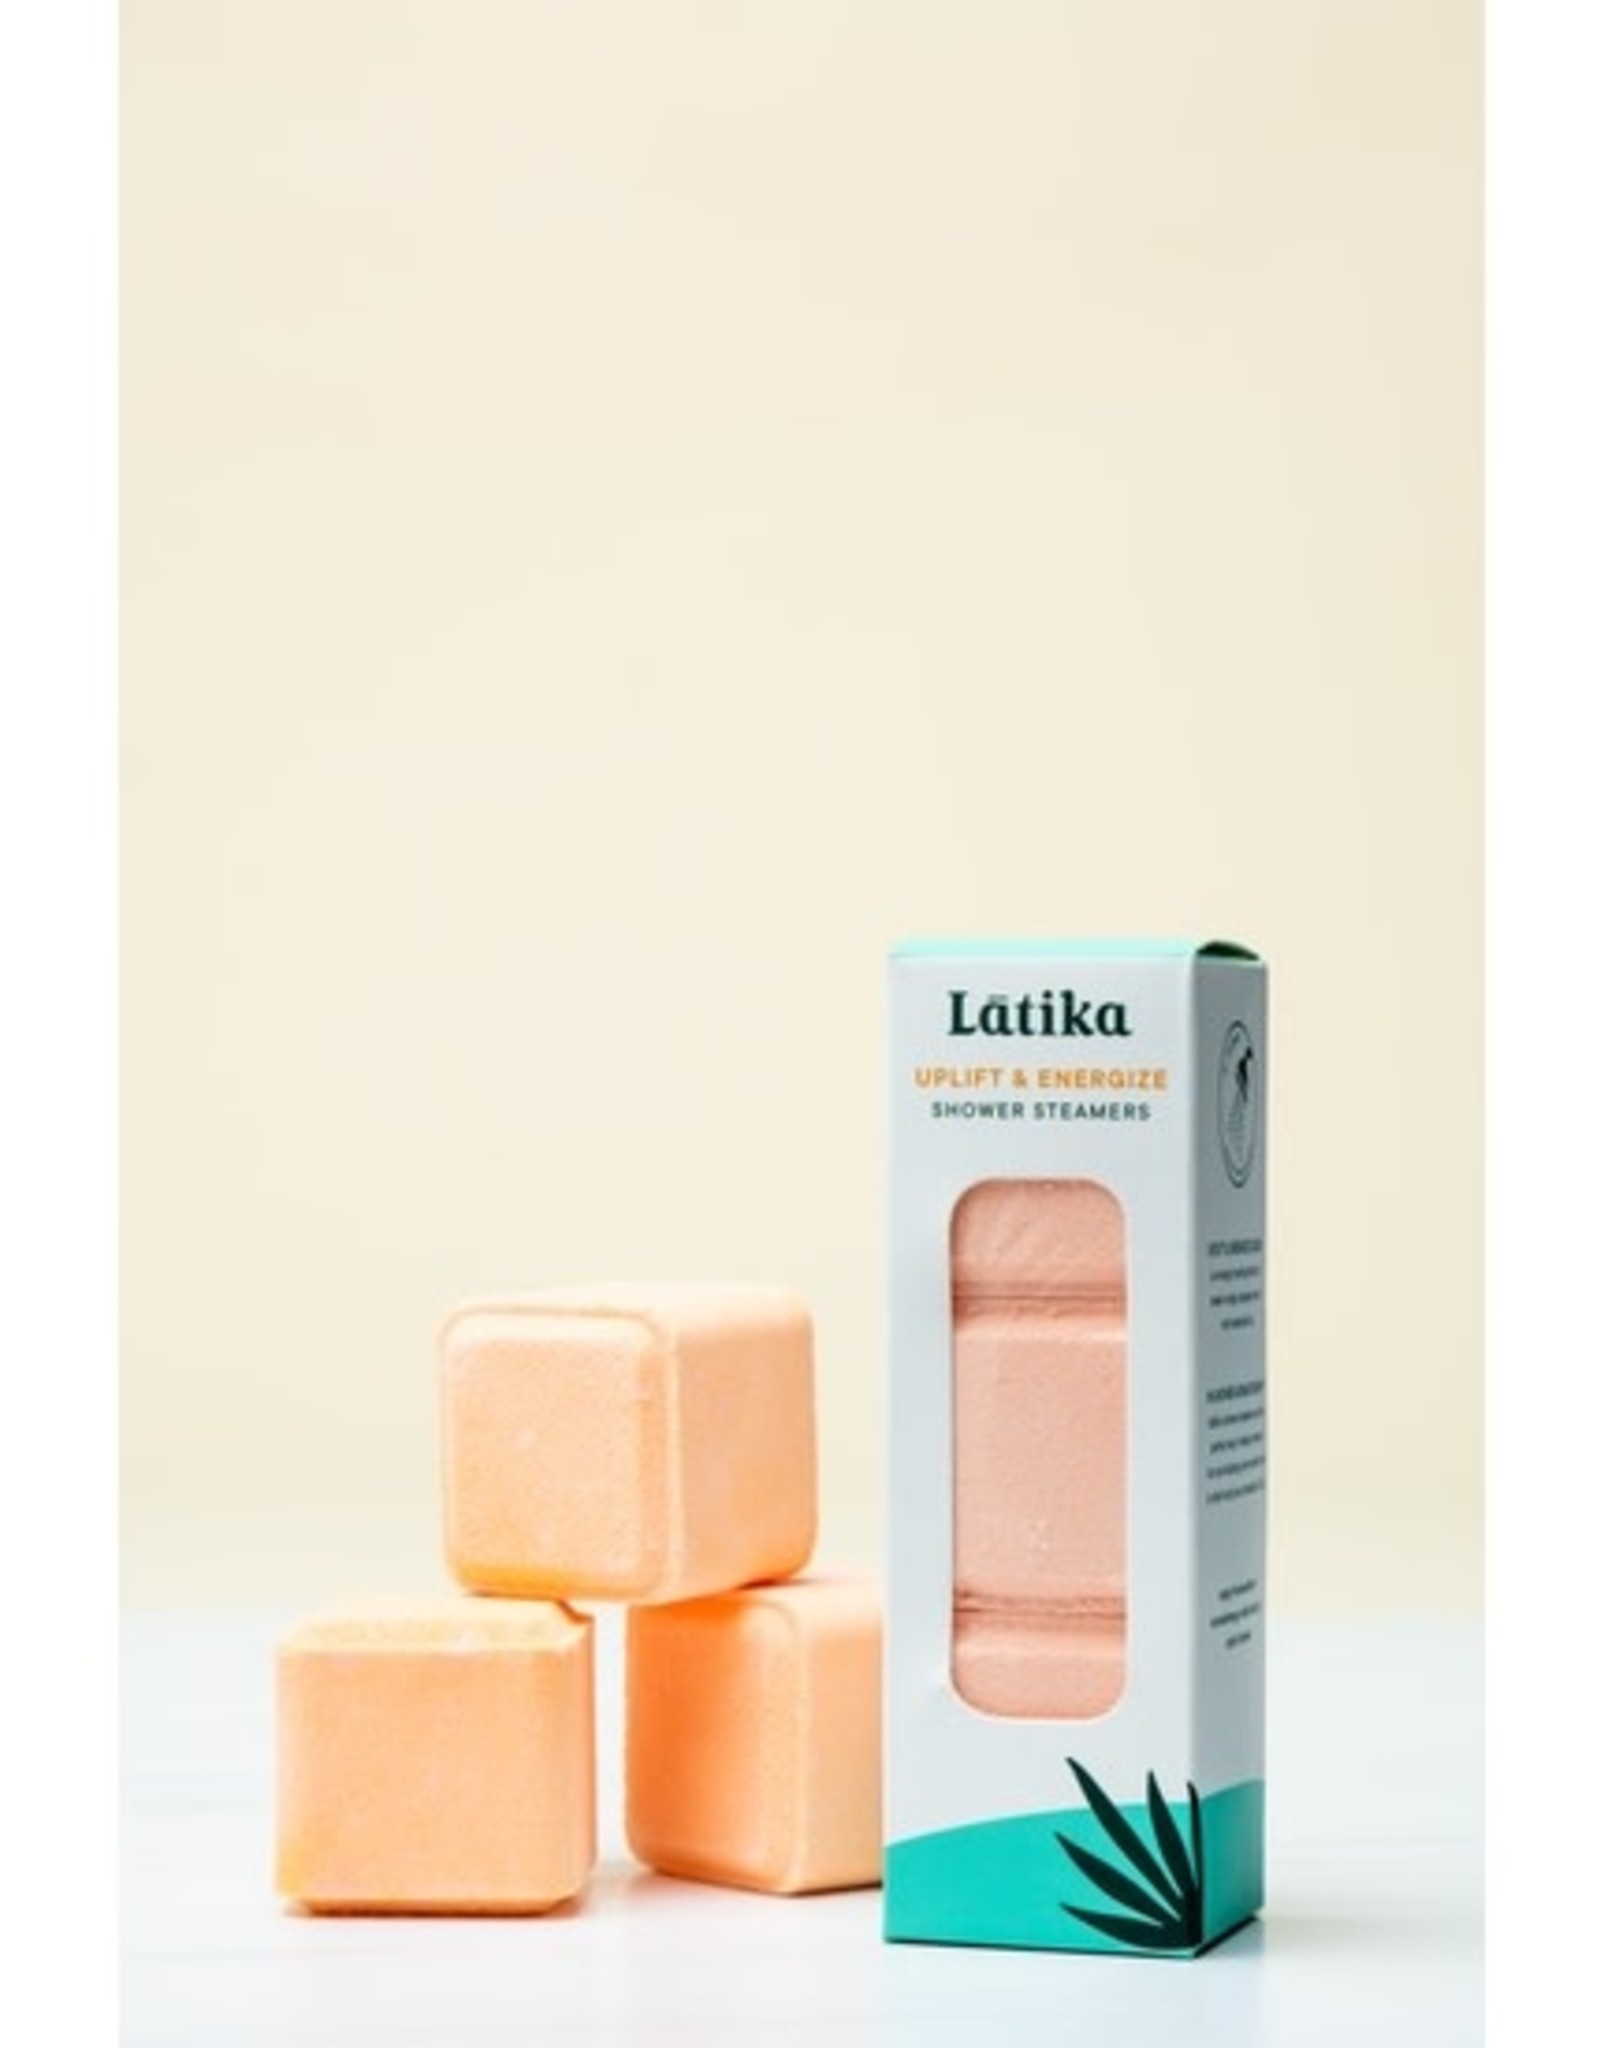 Latika Body Shower Steamer - Uplift & Energize